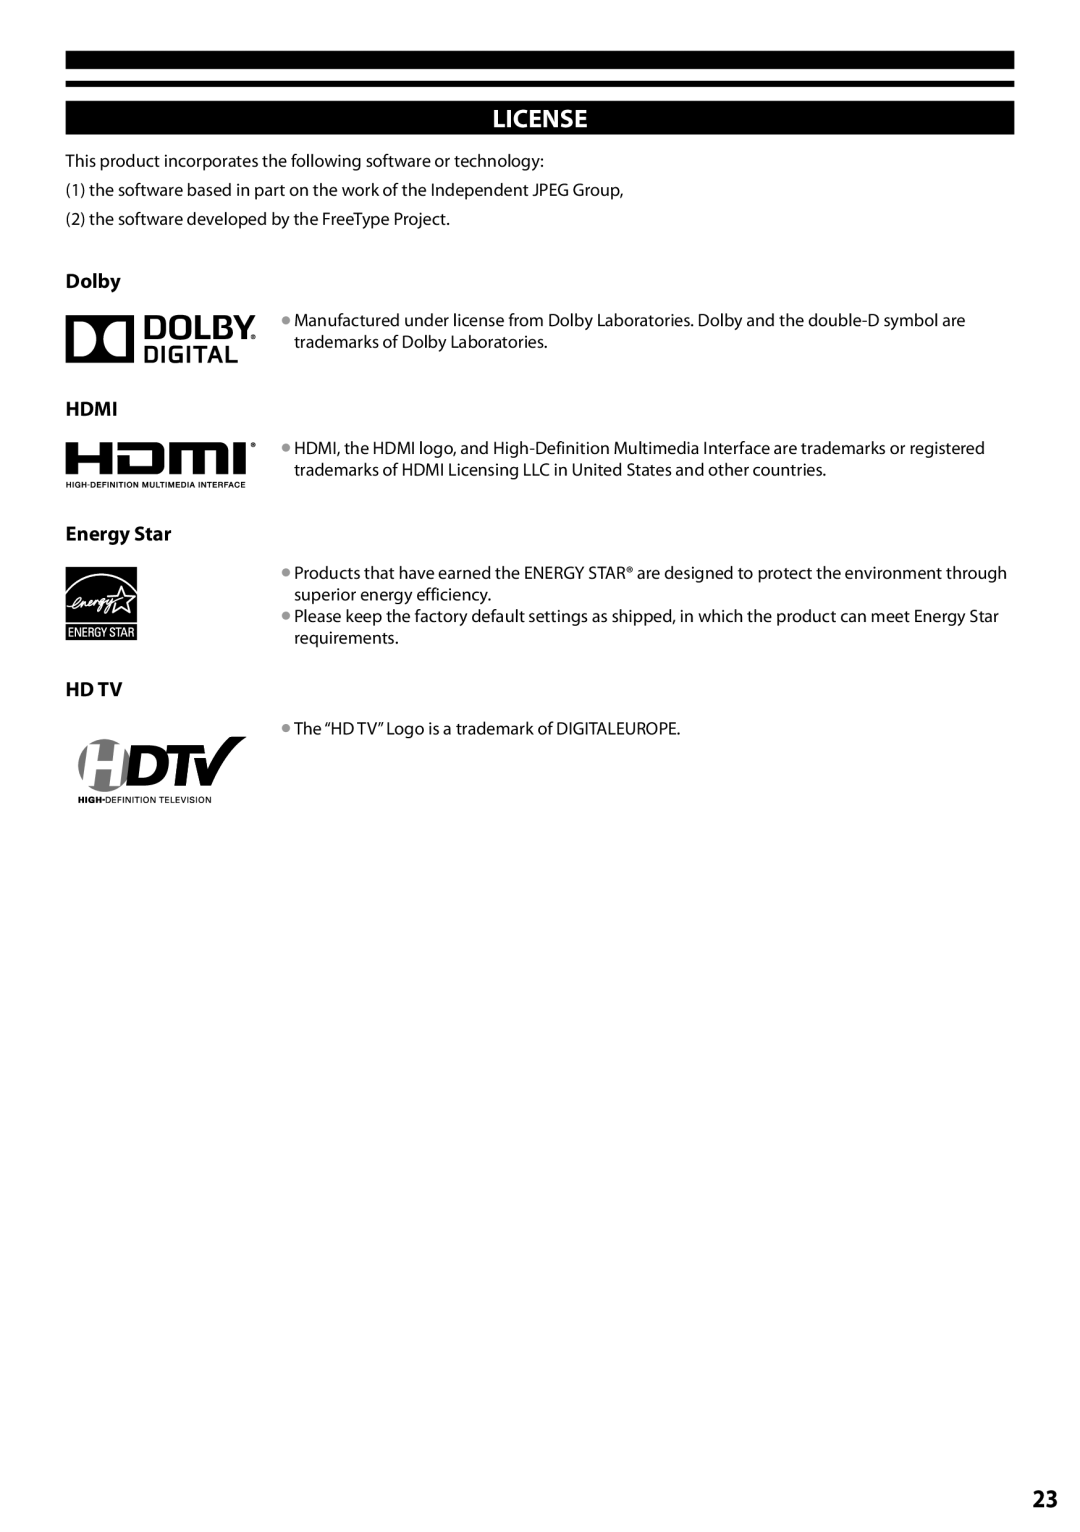 Panasonic TC-L24X5 owner manual License, Dolby, Hdmi, Energy Star, Hd Tv 